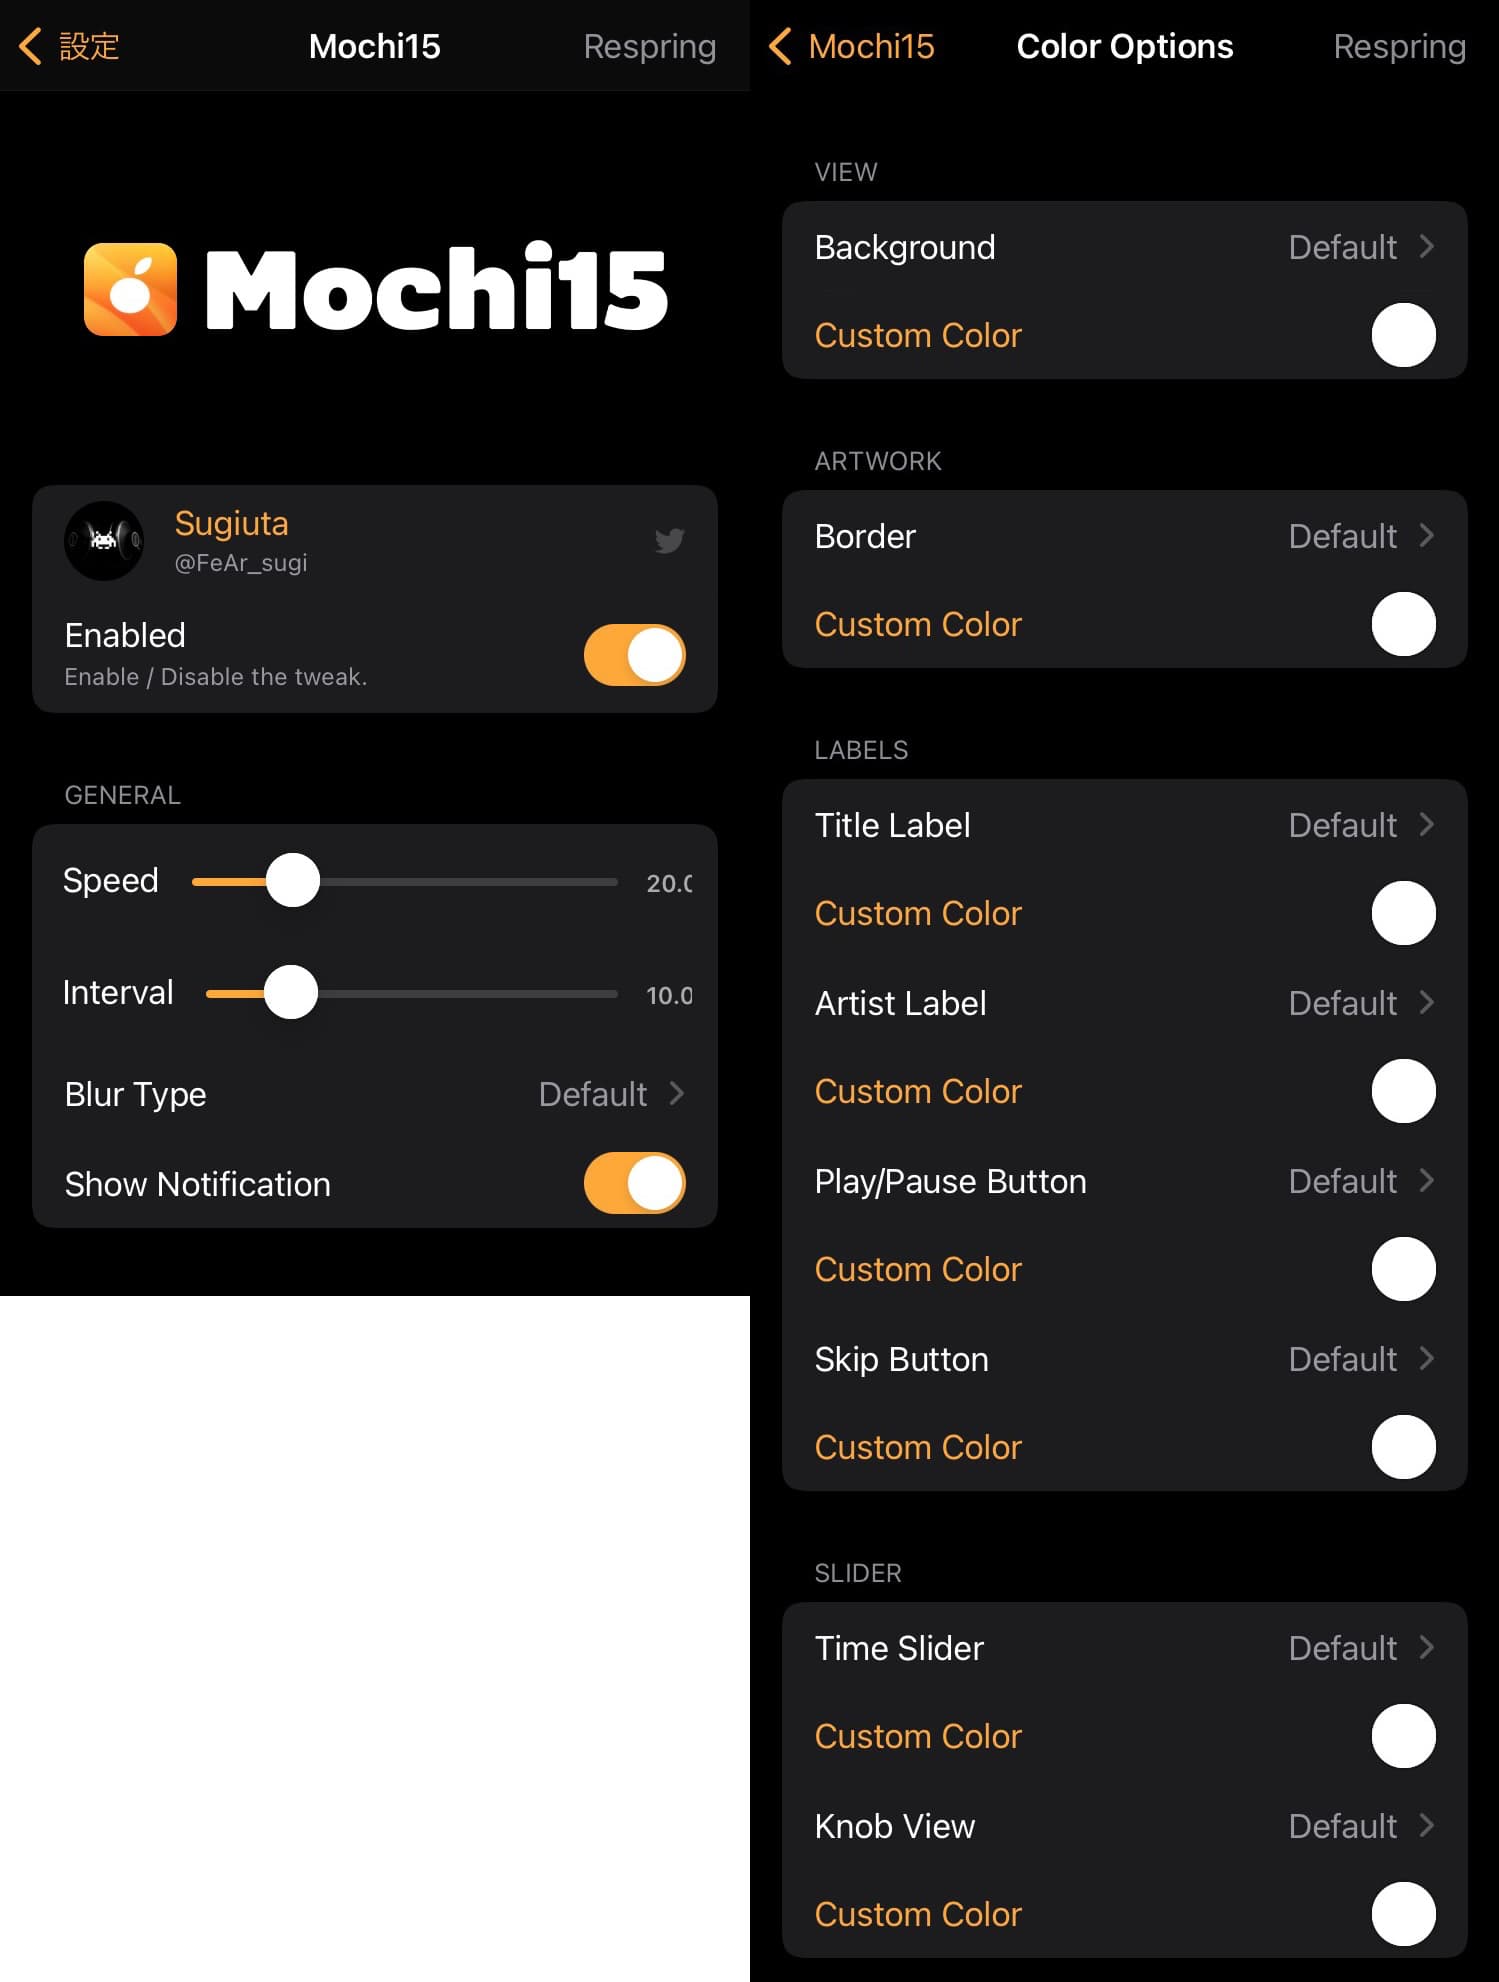 Mochi15 options to configure.